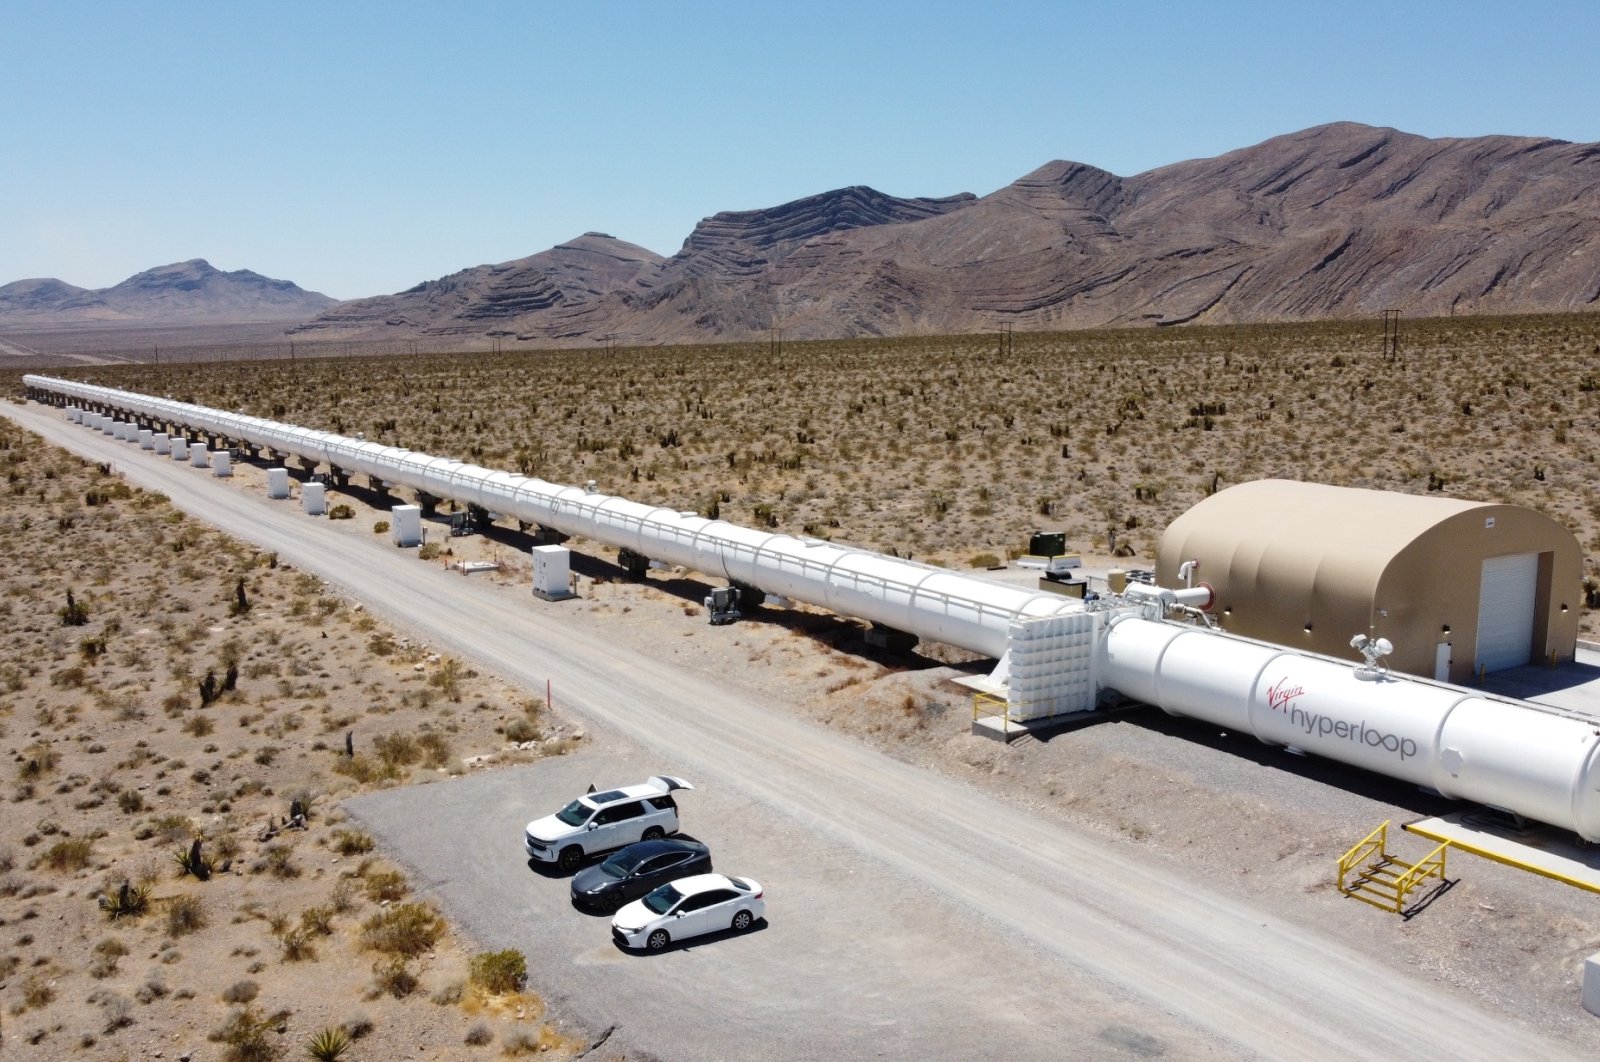 A test hyperloop tube is seen at the Virgin Hyperloop facility near Las Vegas, Nevada, U.S., May 5, 2021. (Reuters Photo)